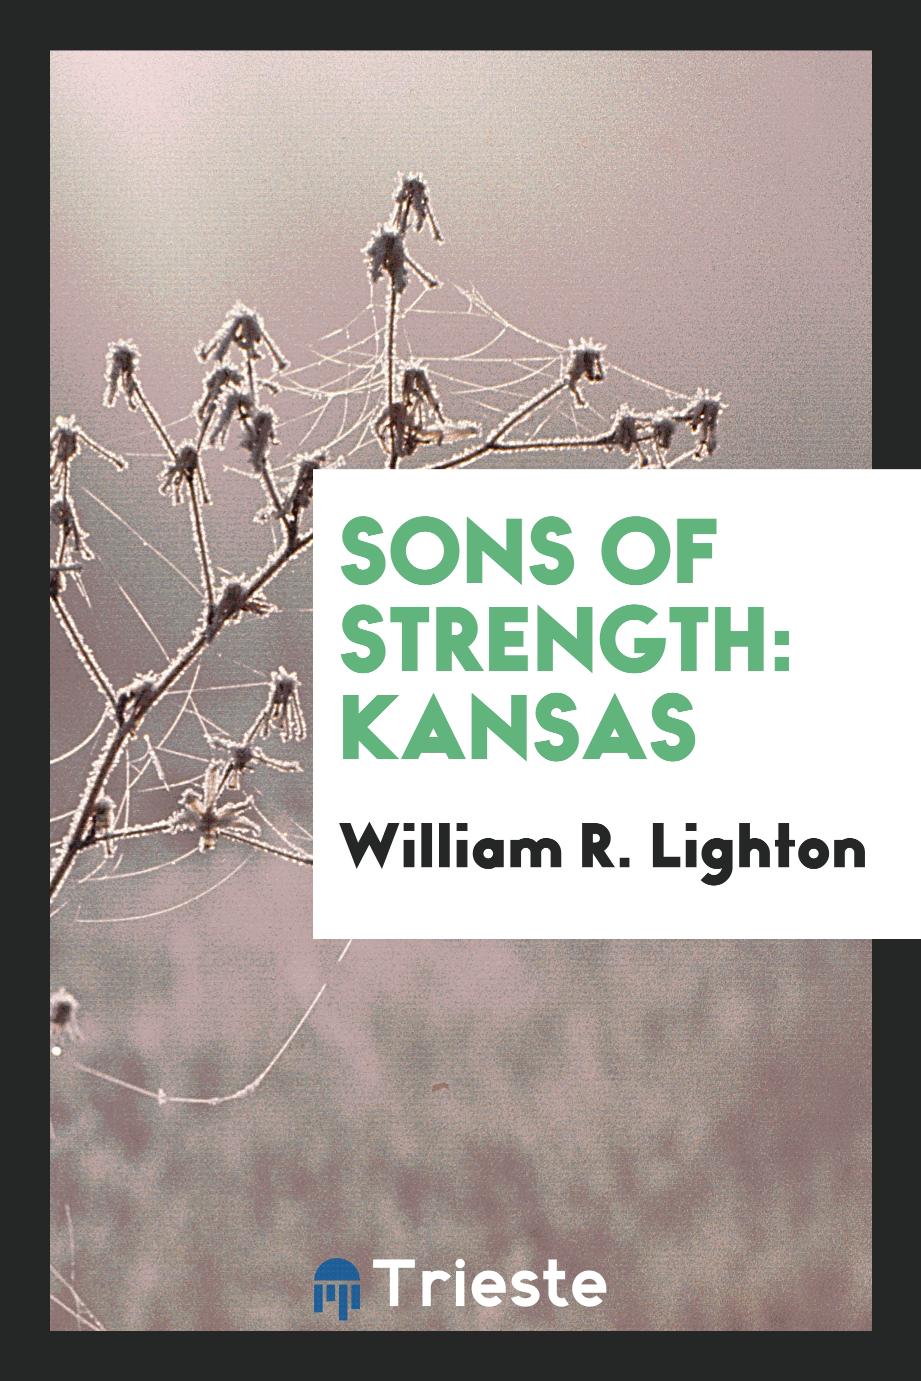 Sons of strength: Kansas